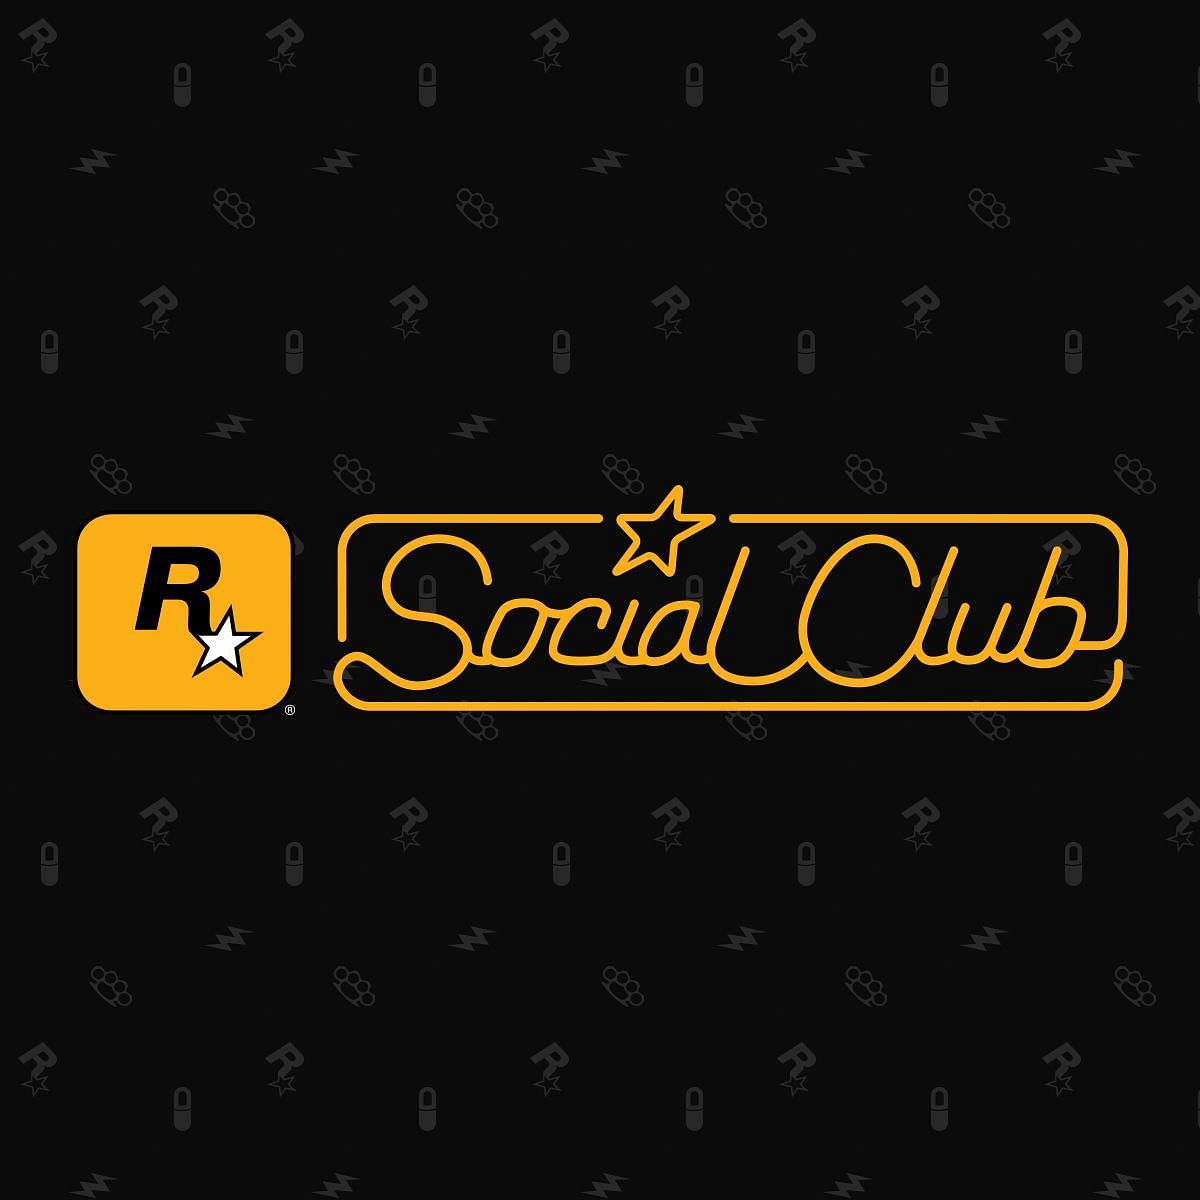 Rockstar Social Club (Image via Rockstar)